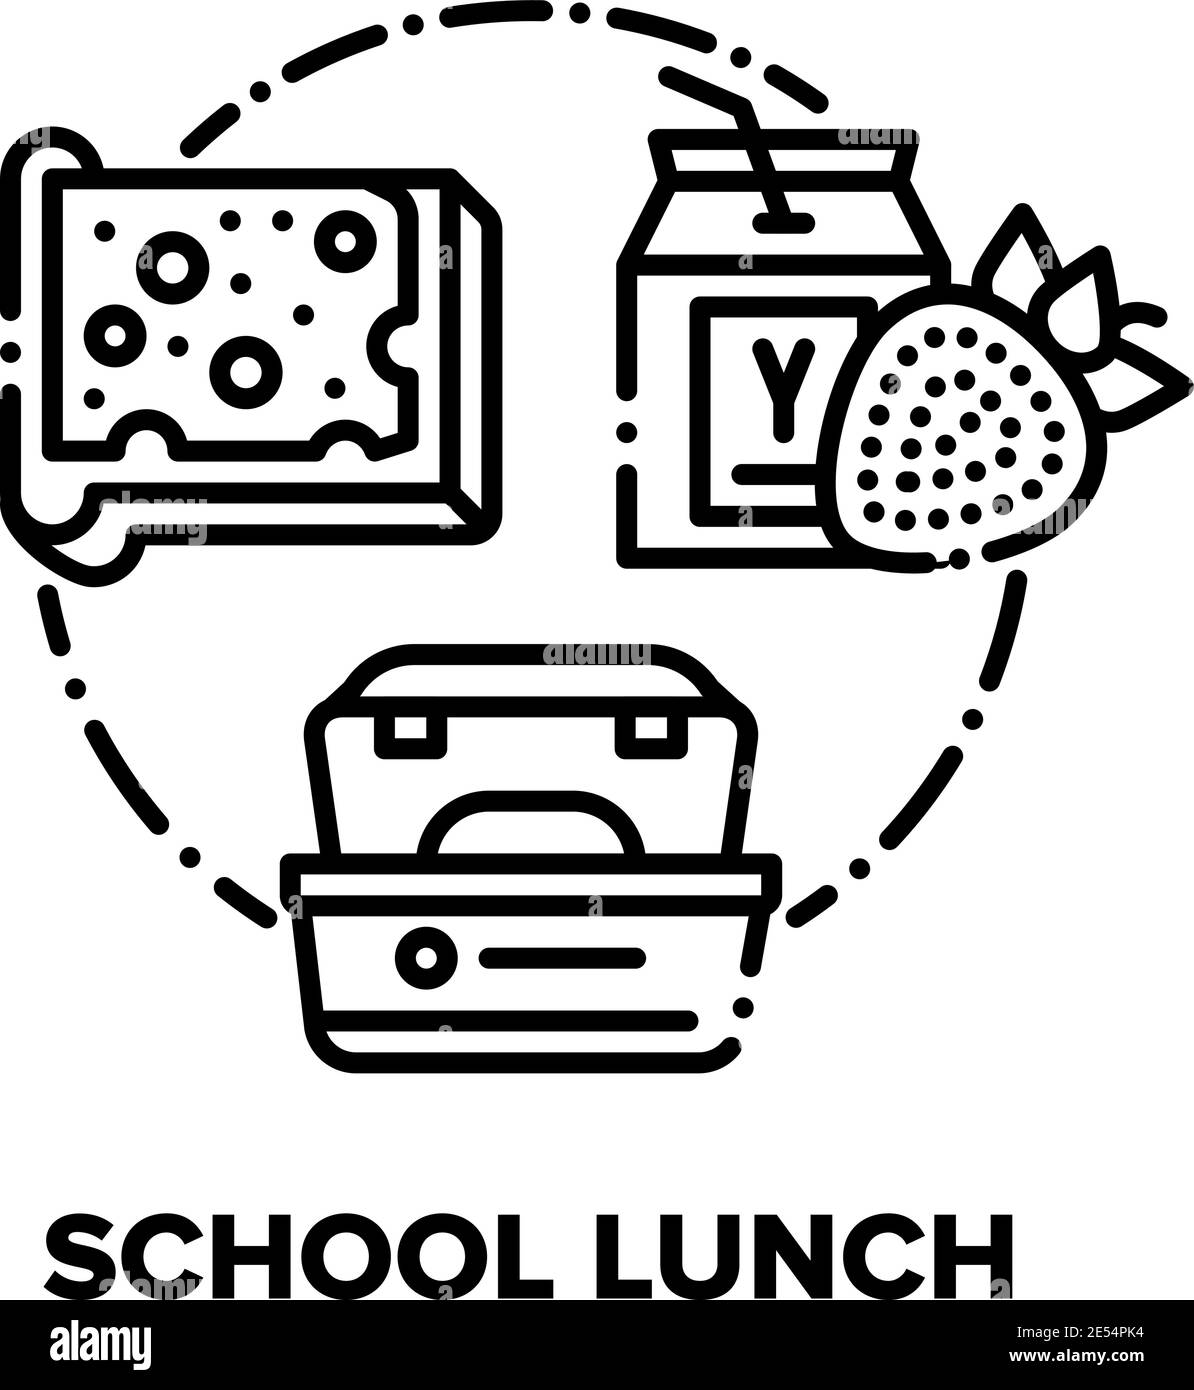 School Lunch Vector Concept Black Illustrations Stock Vector